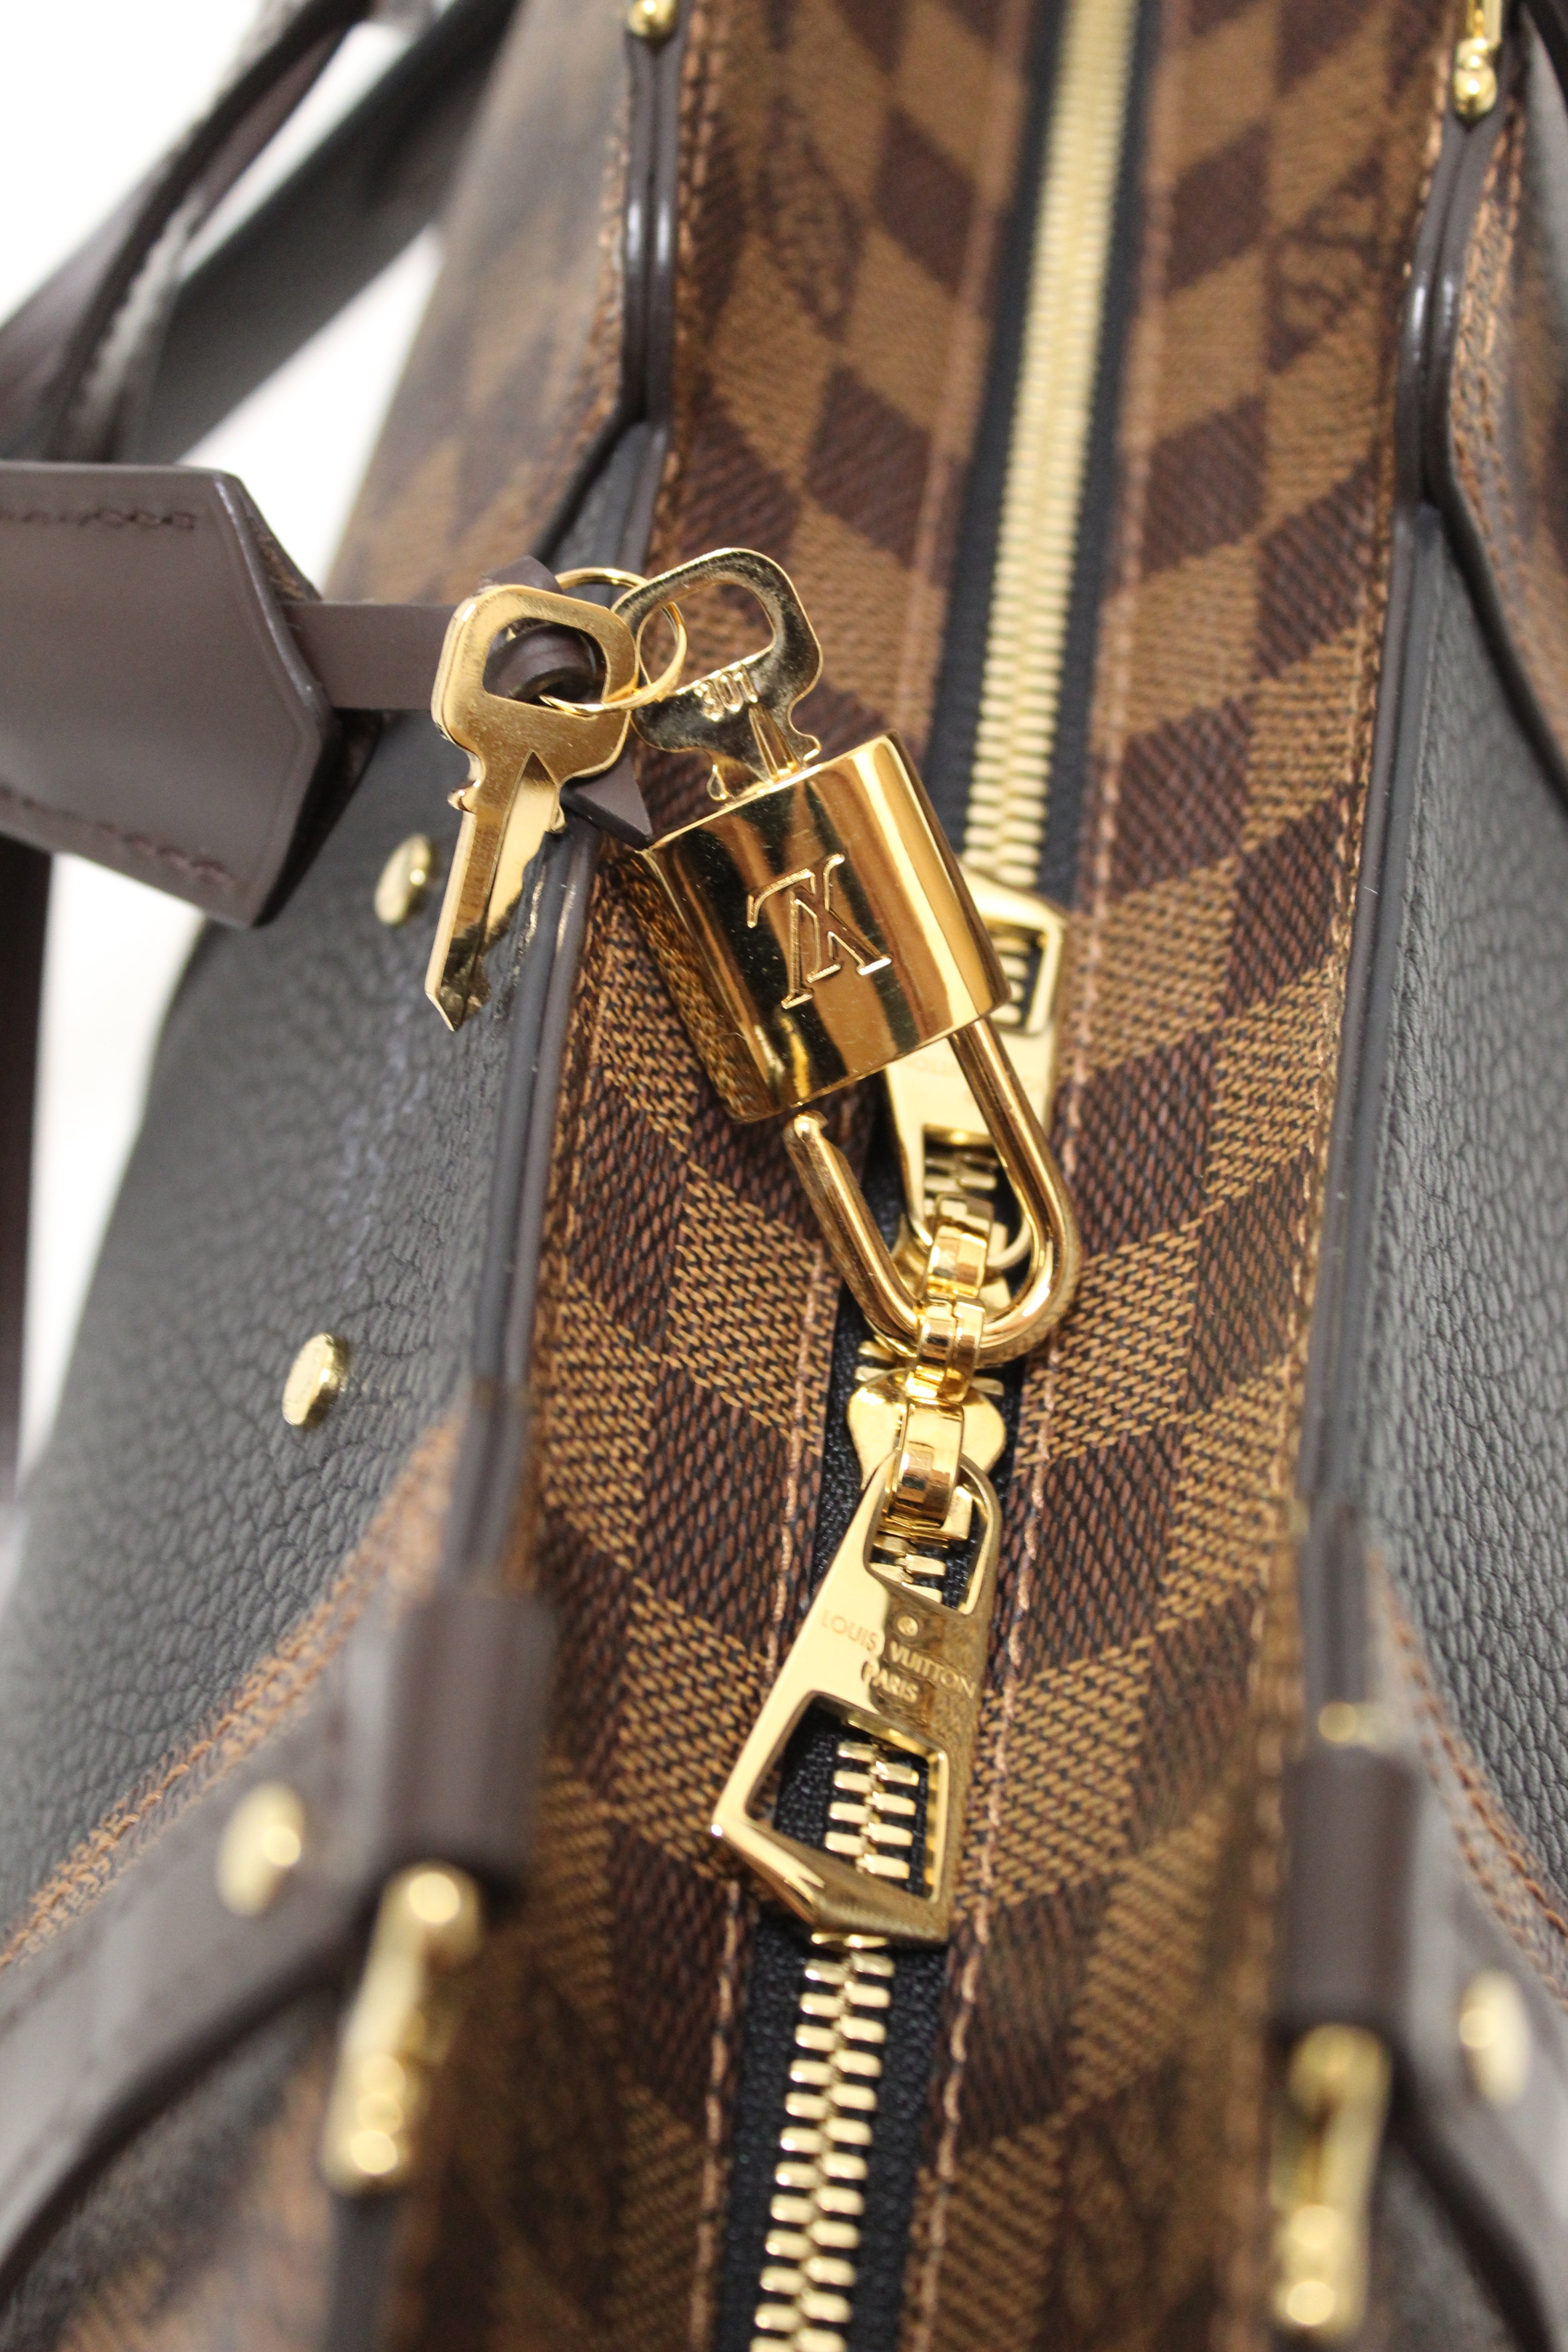 Louis Vuitton Damier Ebene Speedy 30 w/ Strap - Brown Handle Bags